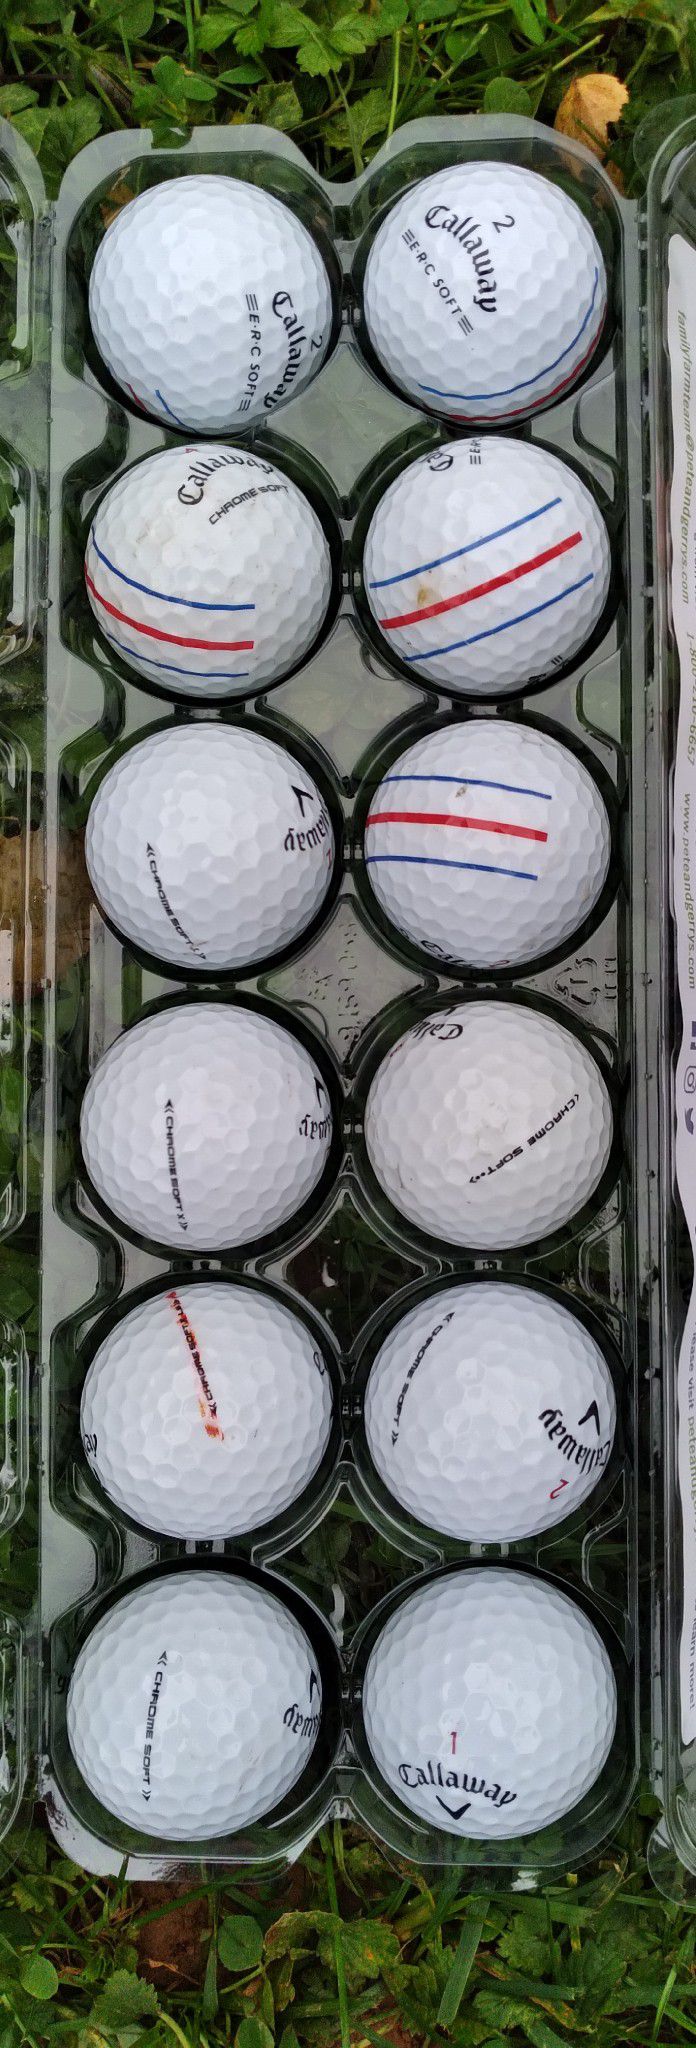 Callaway Golf Balls (Please See Description)